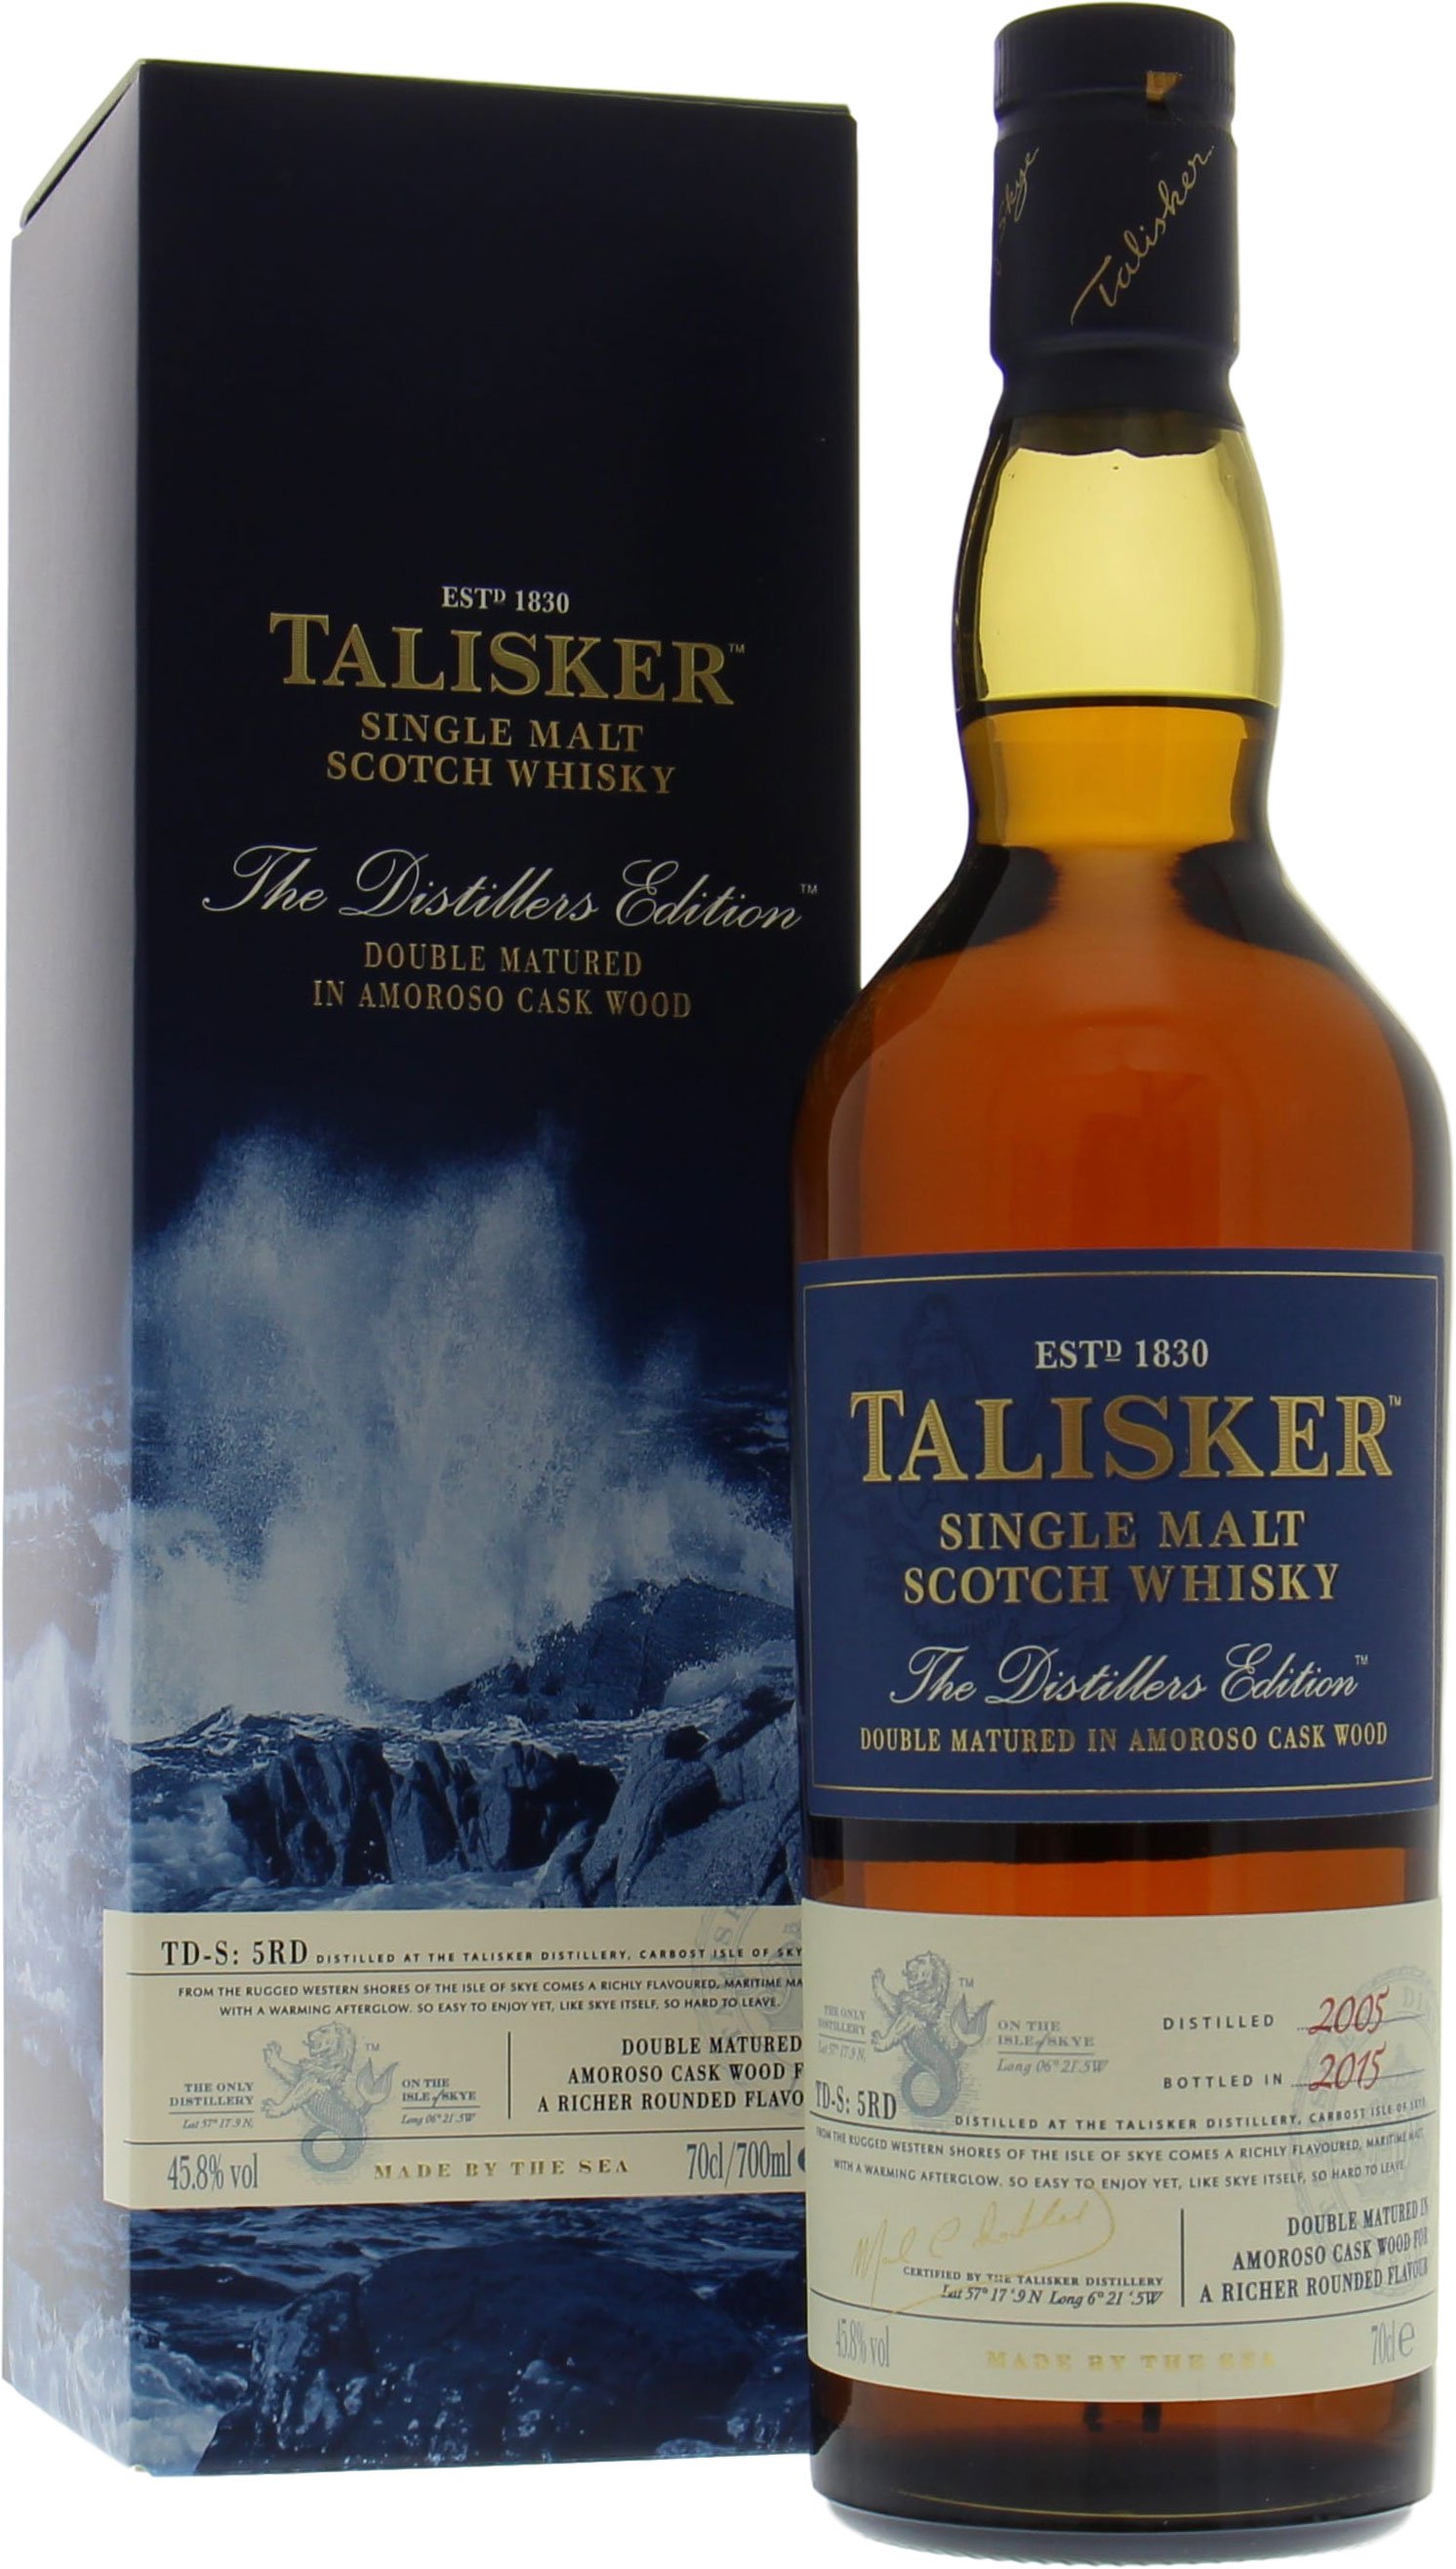 Talisker - Distillers Edition 2015 45.8% 2005